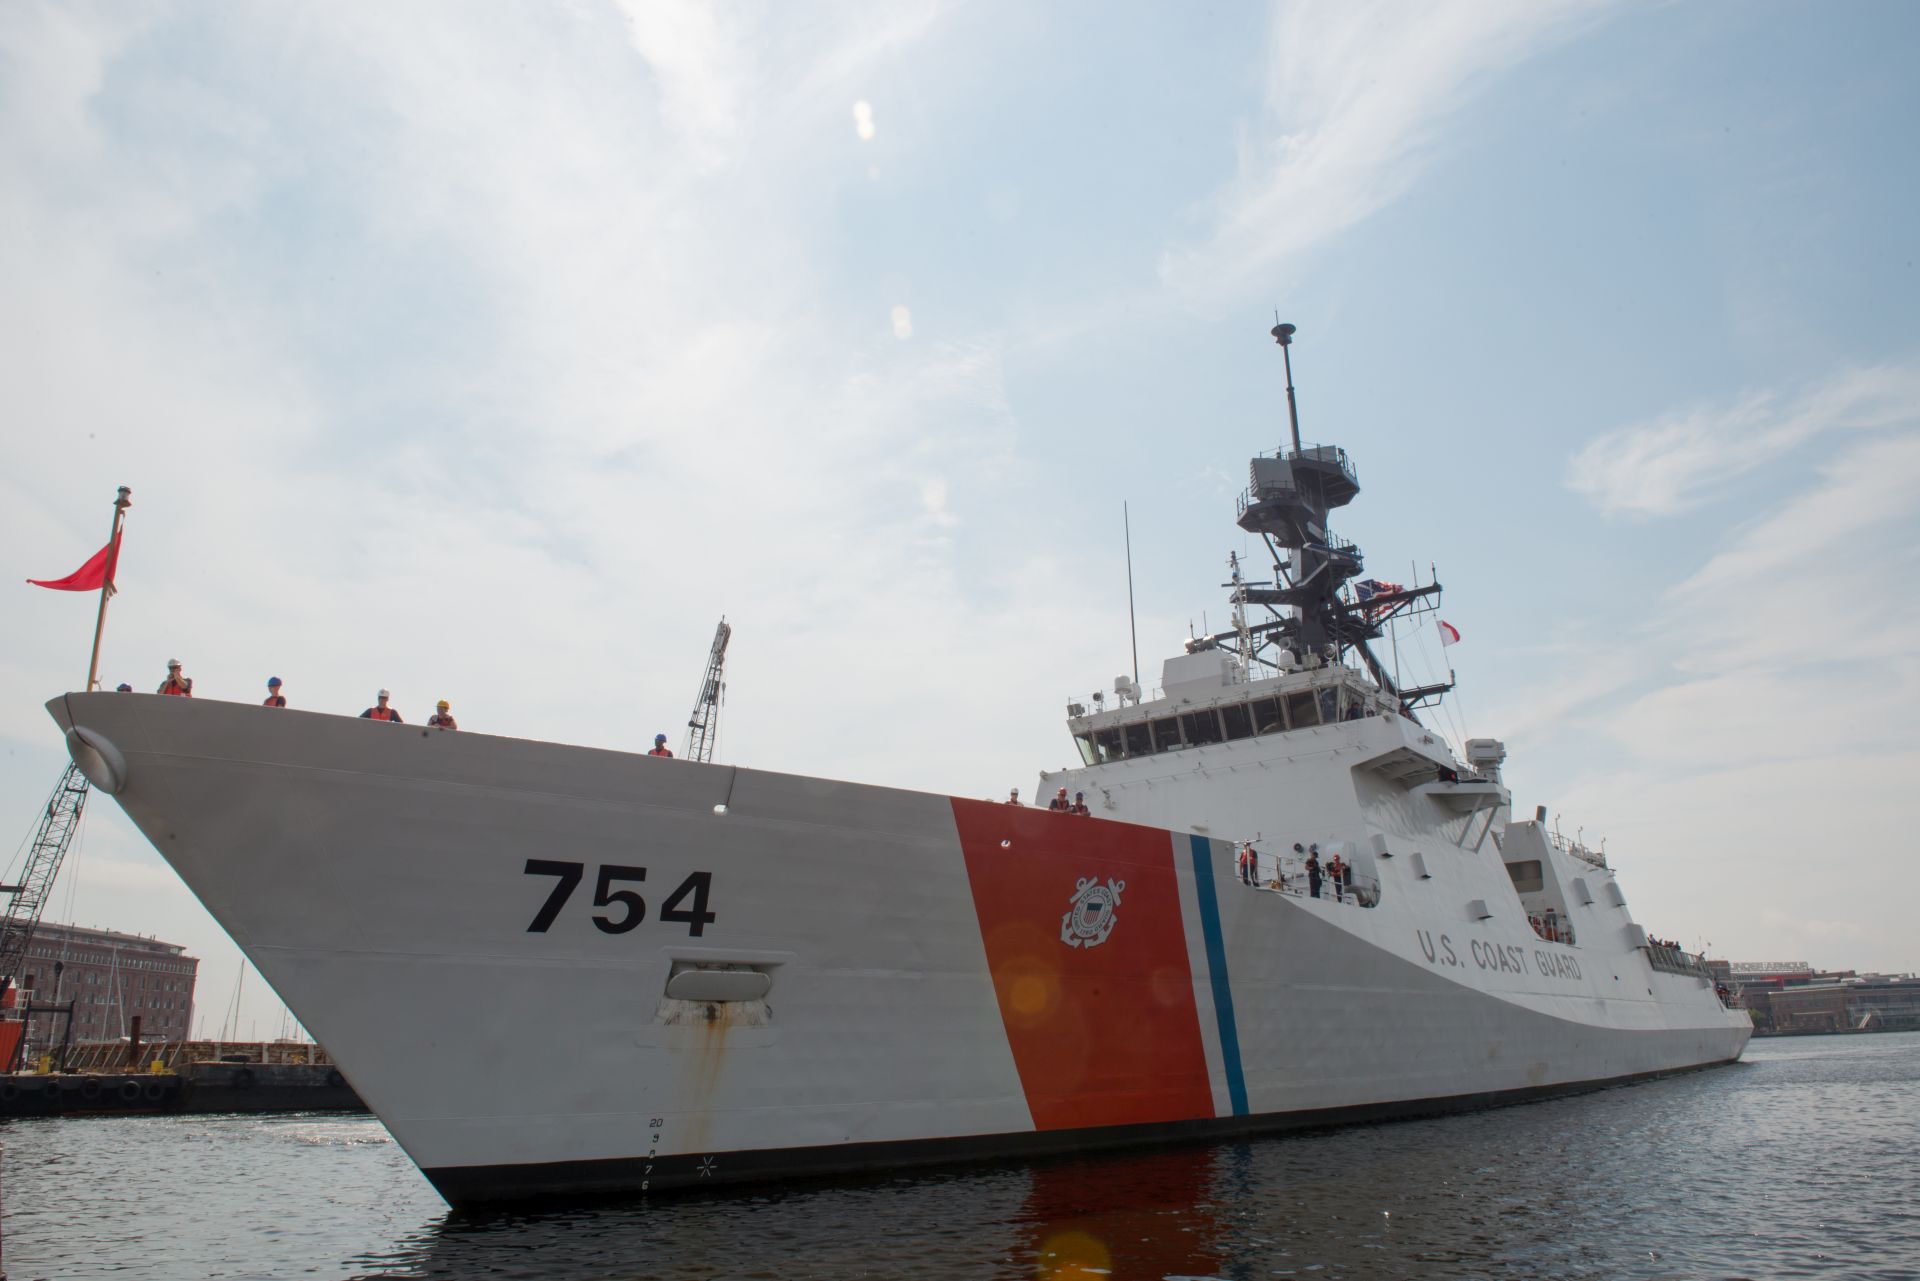 Coast Guard Cutter James arrives in Baltimore